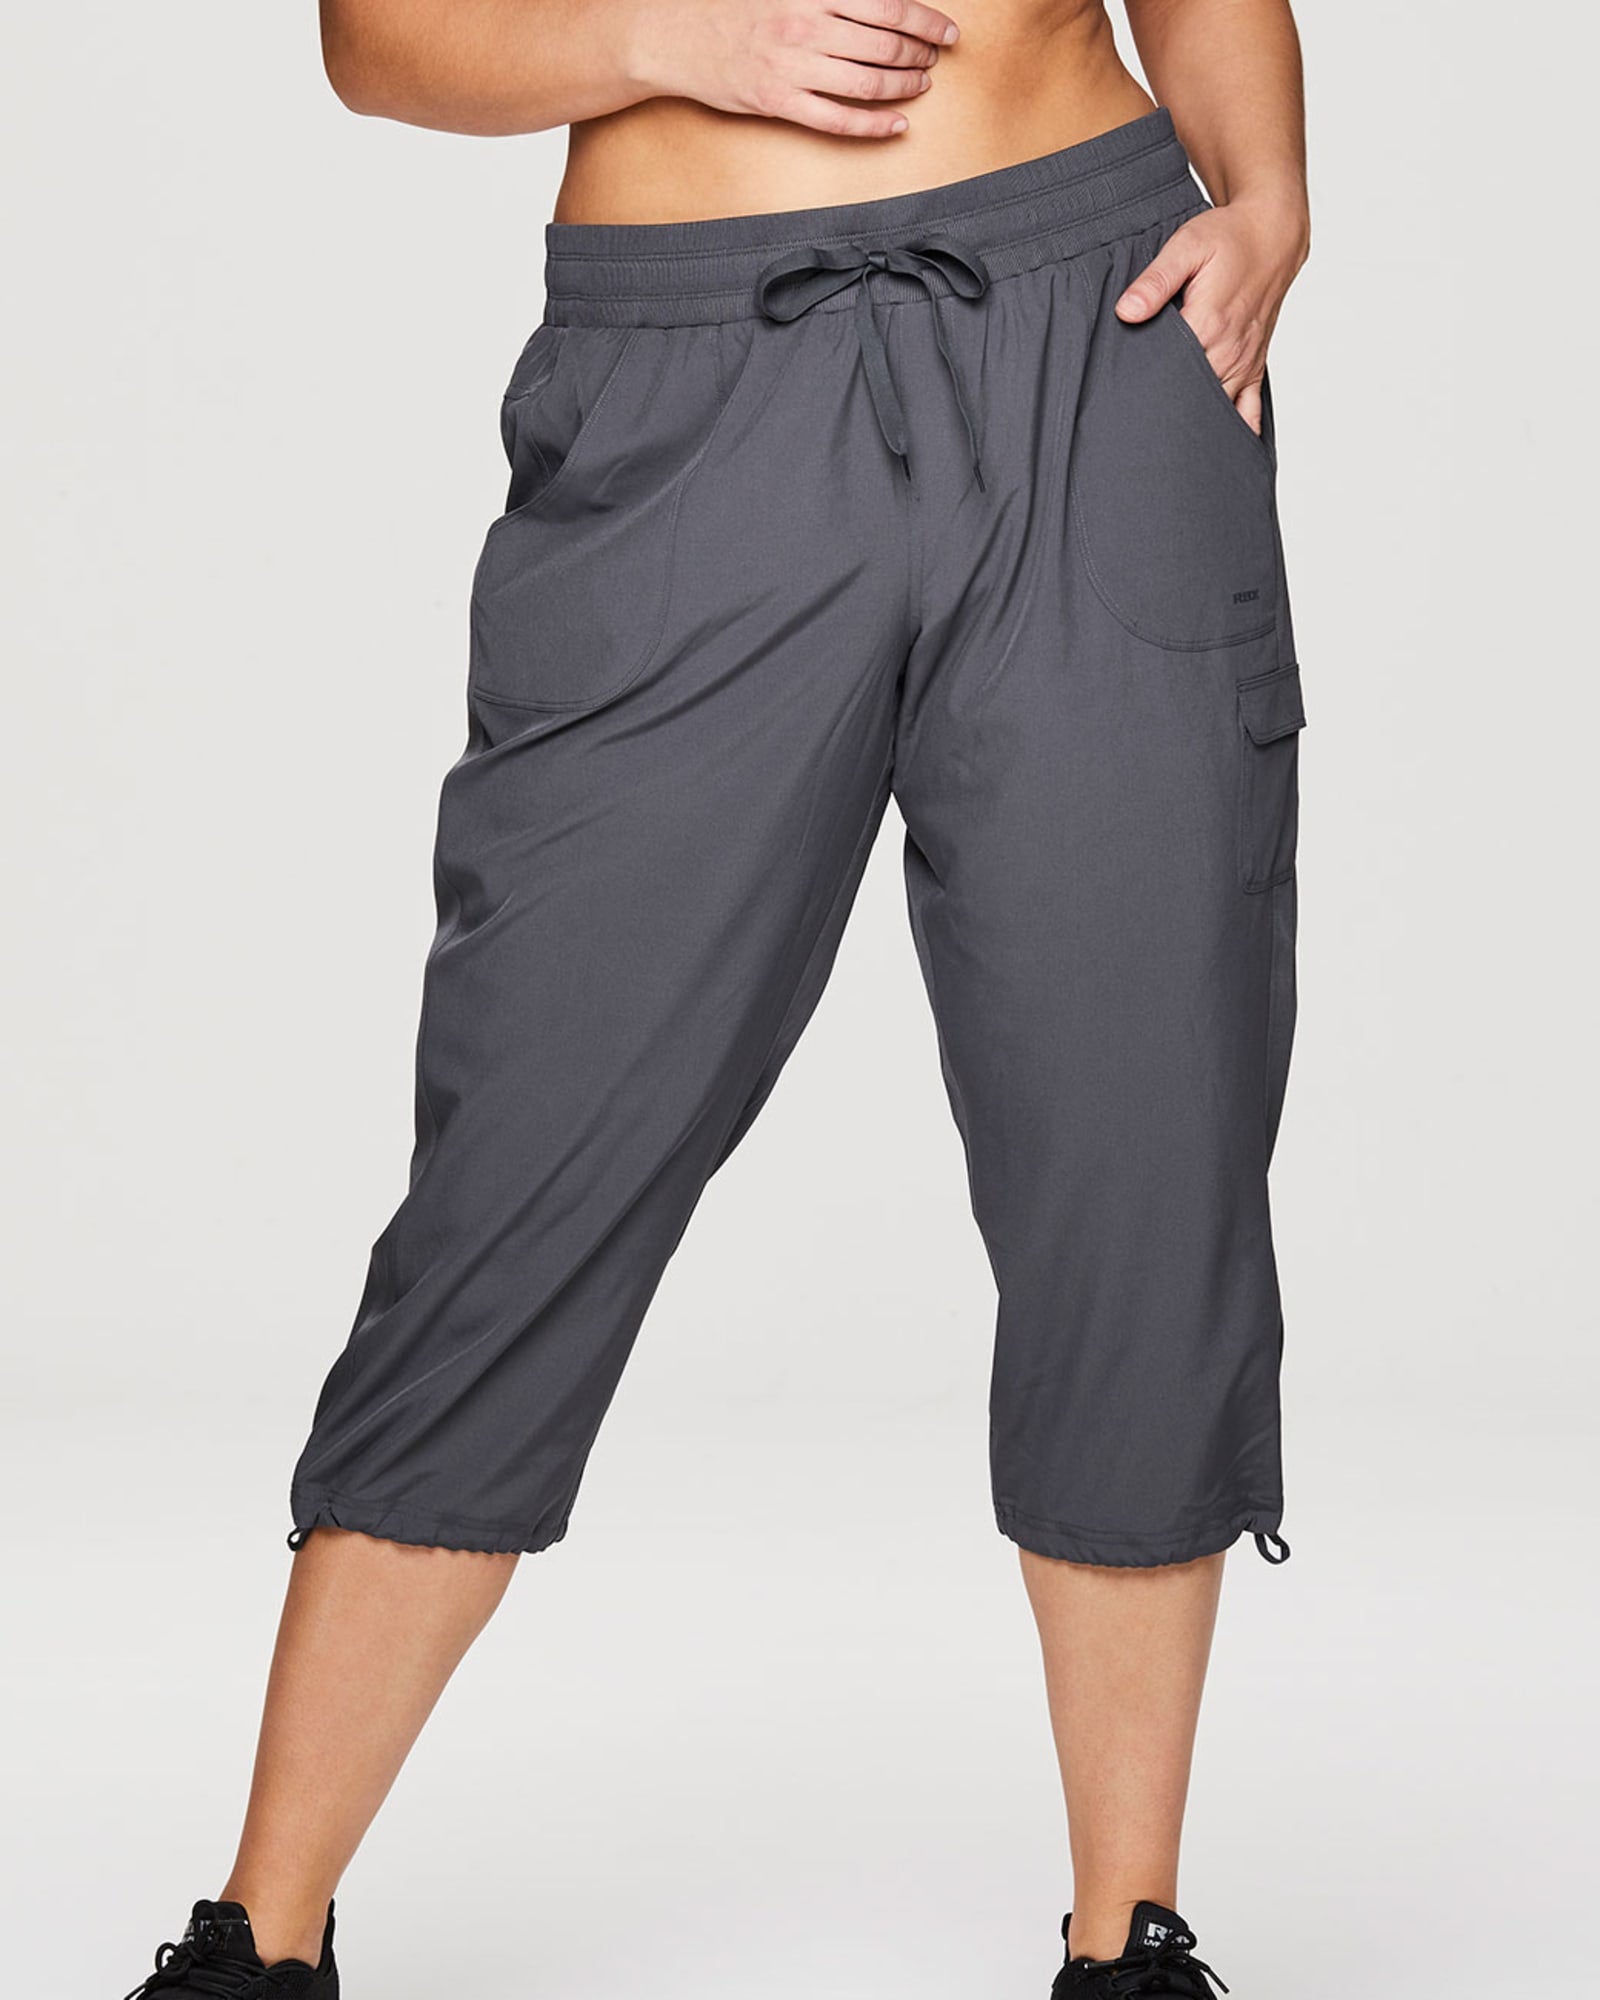 Plus Size CAPRI /3/4 pants for women